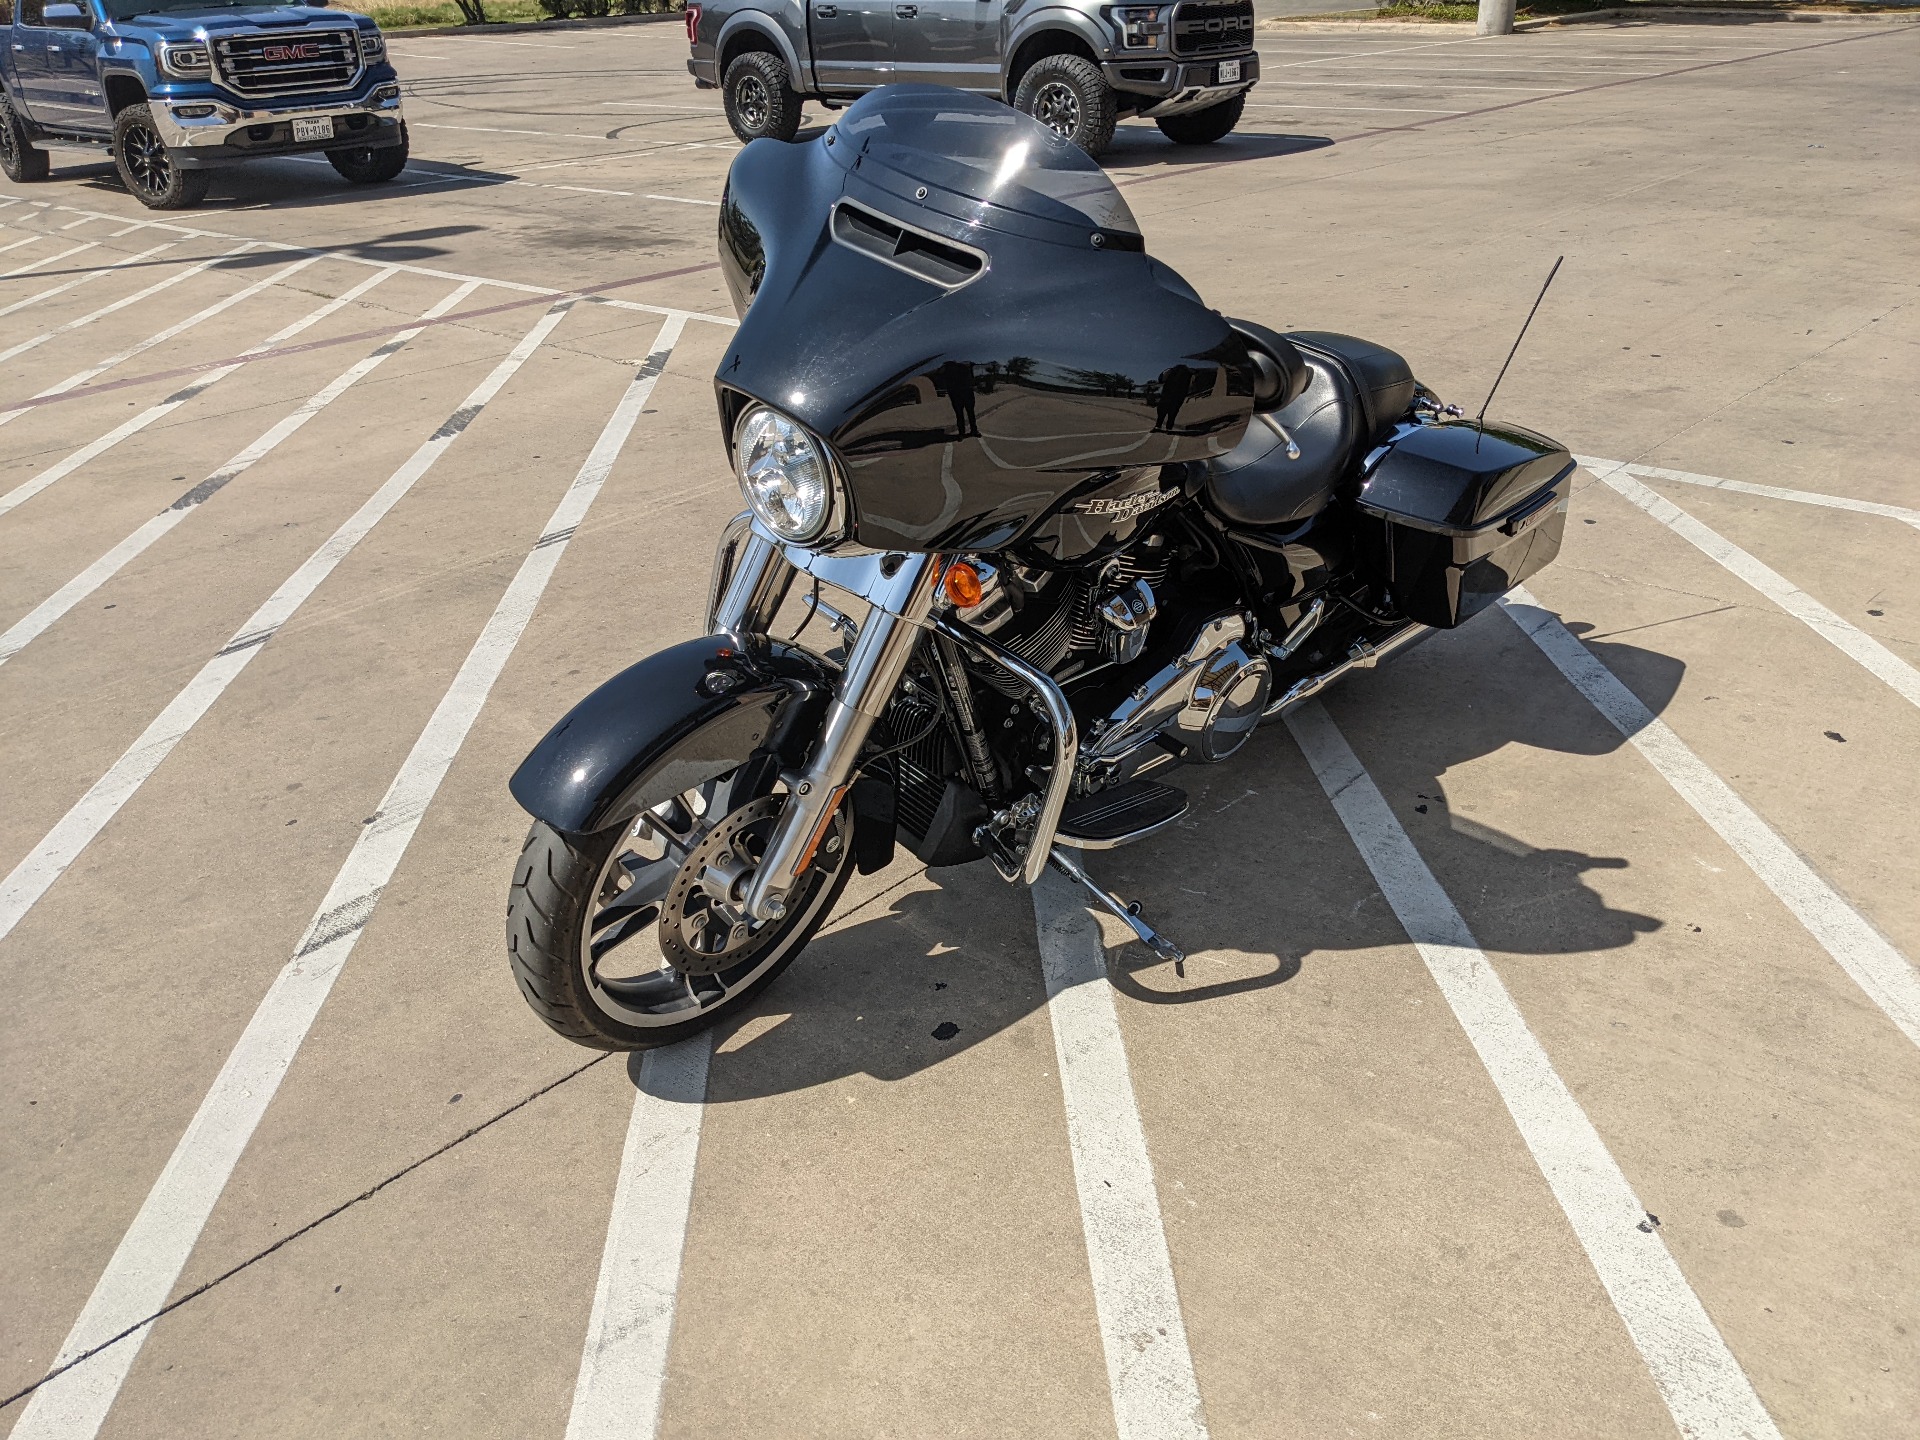 2019 Harley-Davidson Street Glide® in San Antonio, Texas - Photo 4